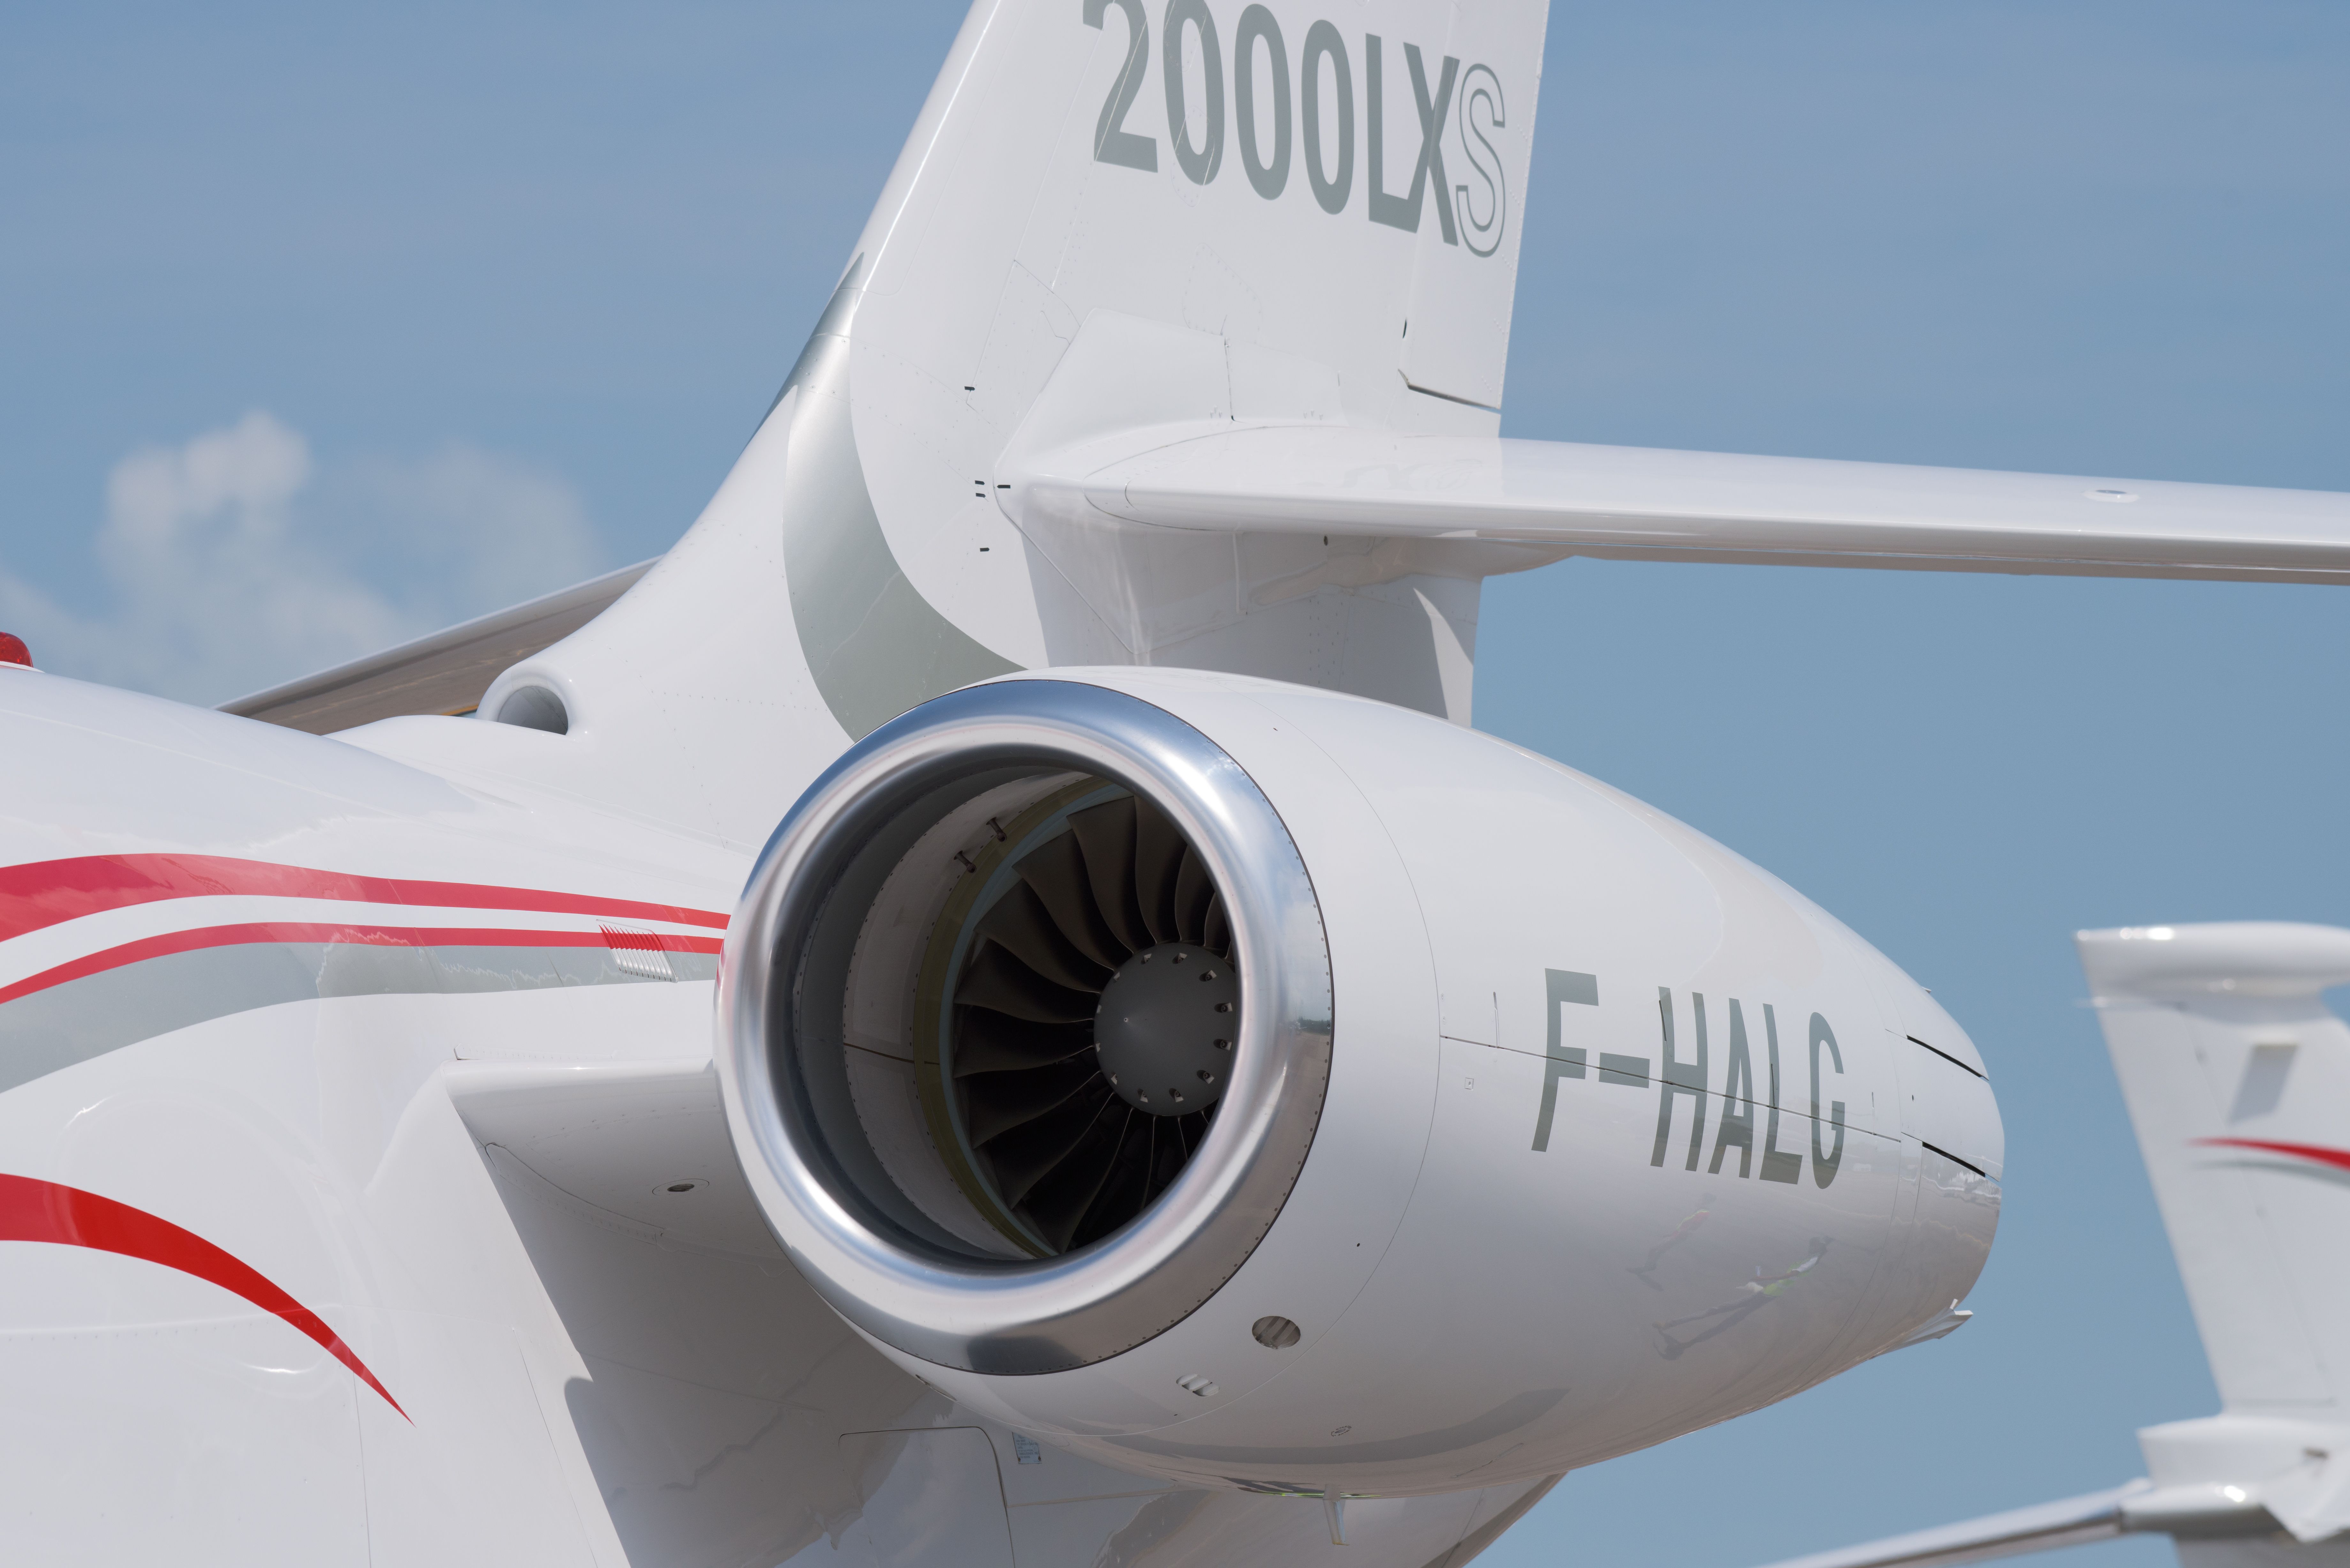 Dassault Falcon 2000LXS shutterstock_377861032